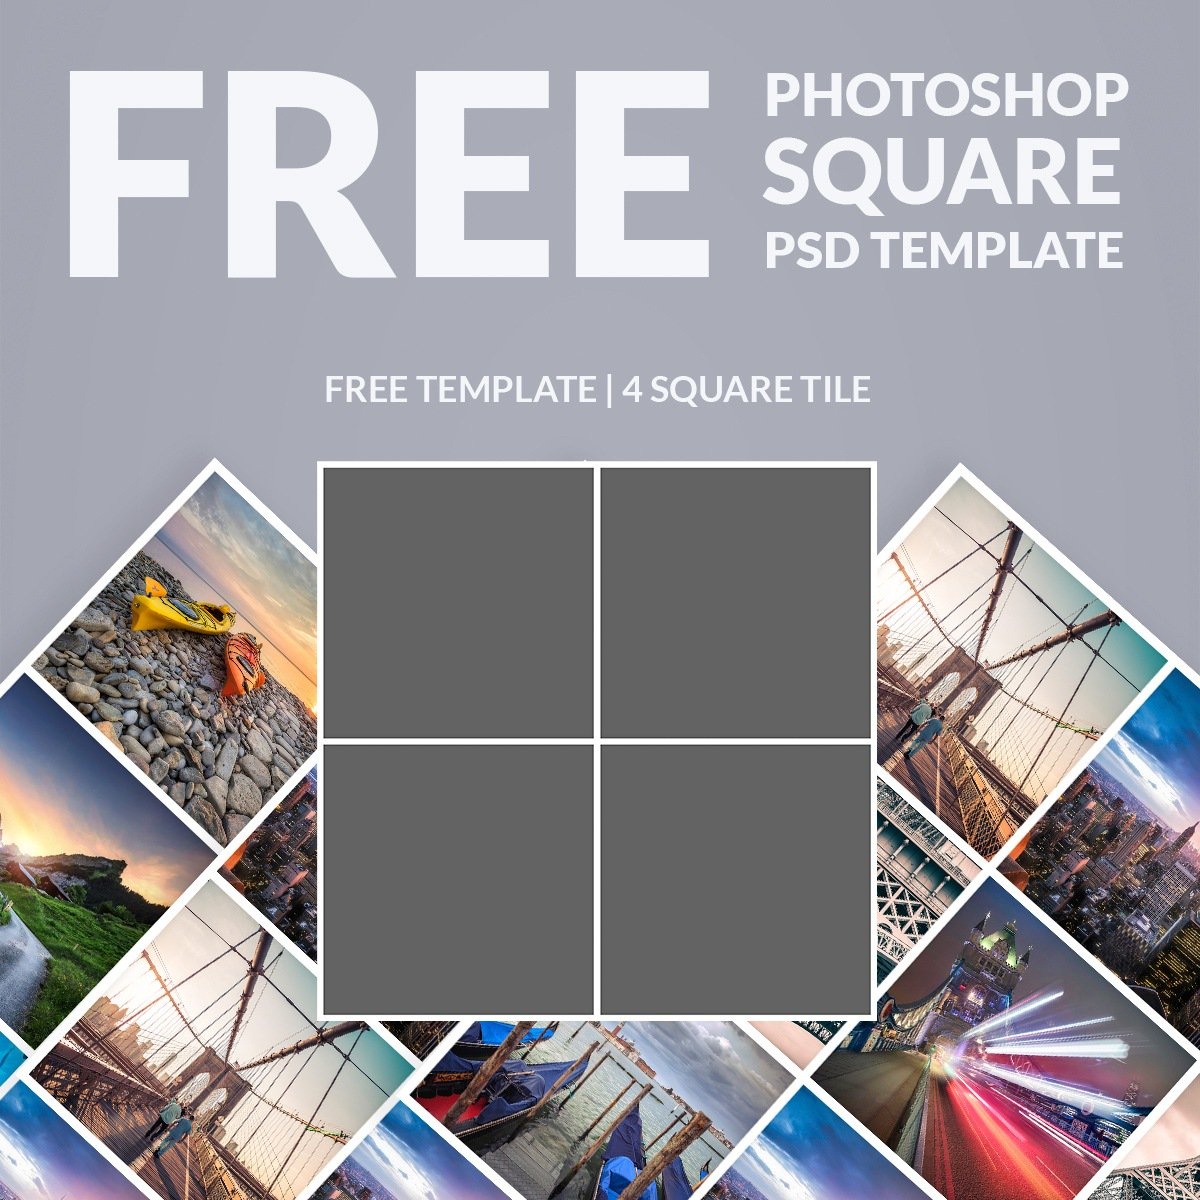 Adobe Photoshop Templates Free Download